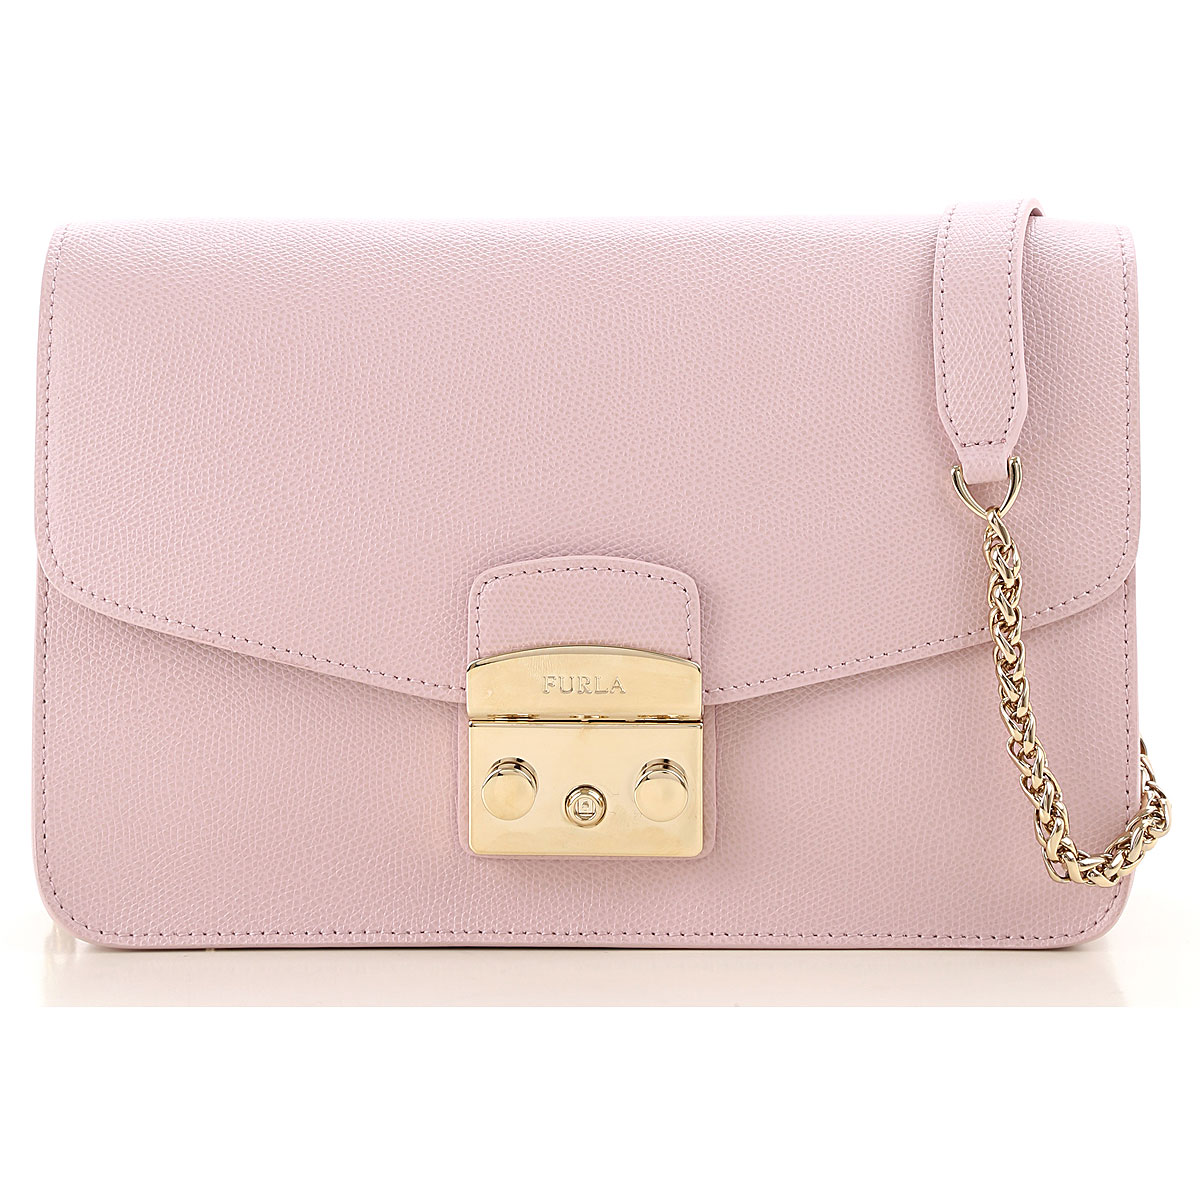 Handbags Furla, Style code: 972391-metropolis-camelia